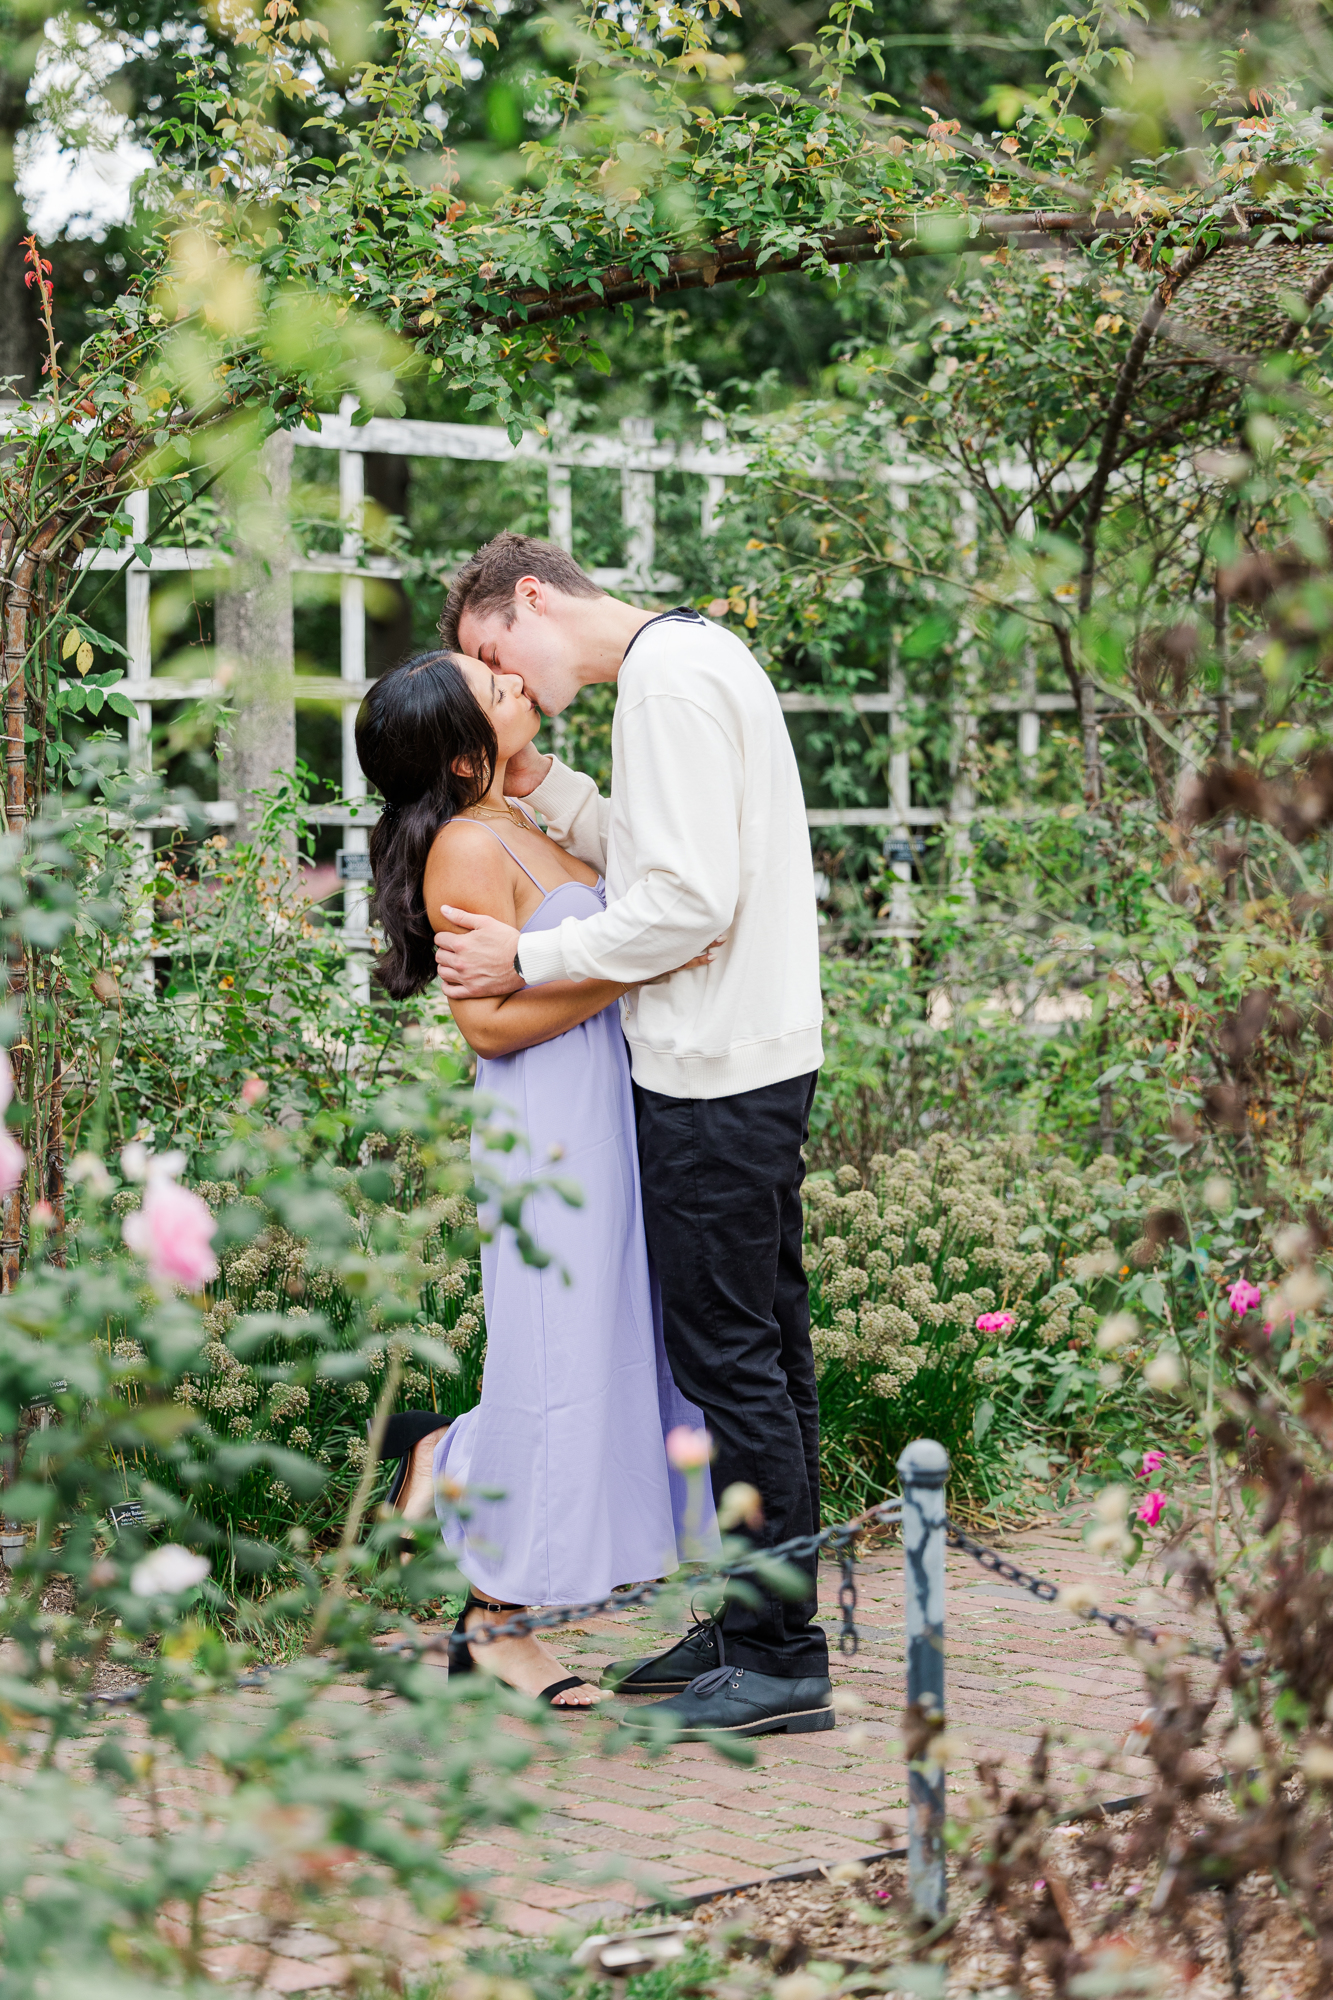 Vivid Proposal Photos in the Rose Garden at Brooklyn Botanic Garden